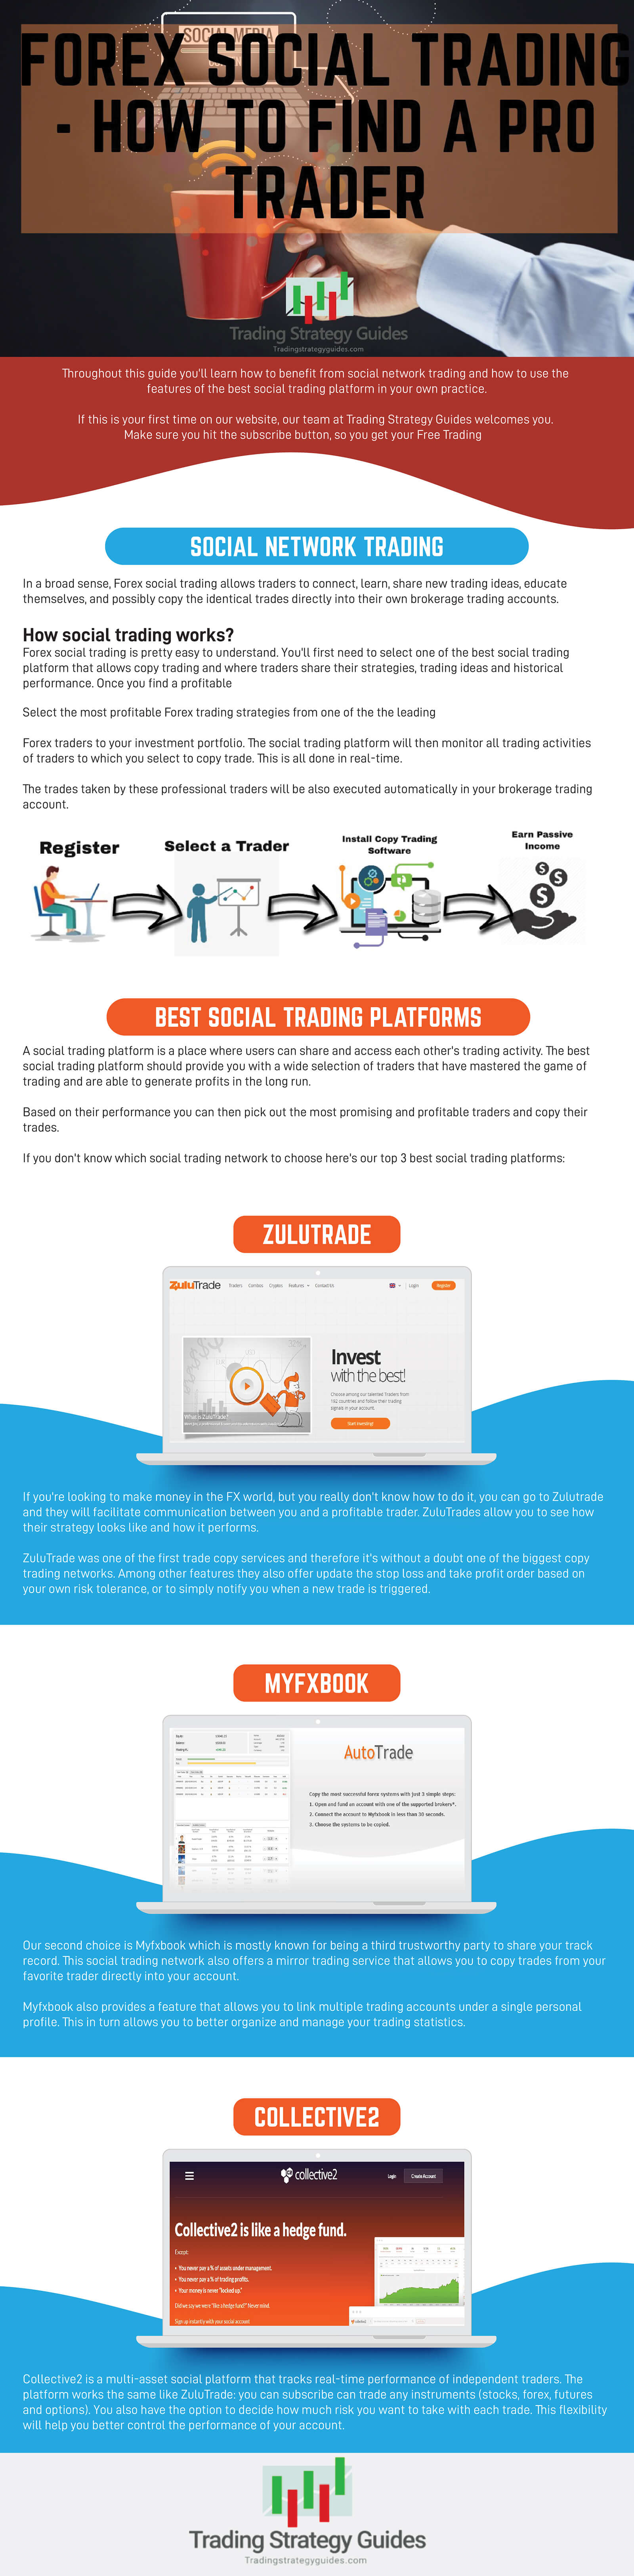 Best Social Trading Platform Infographic